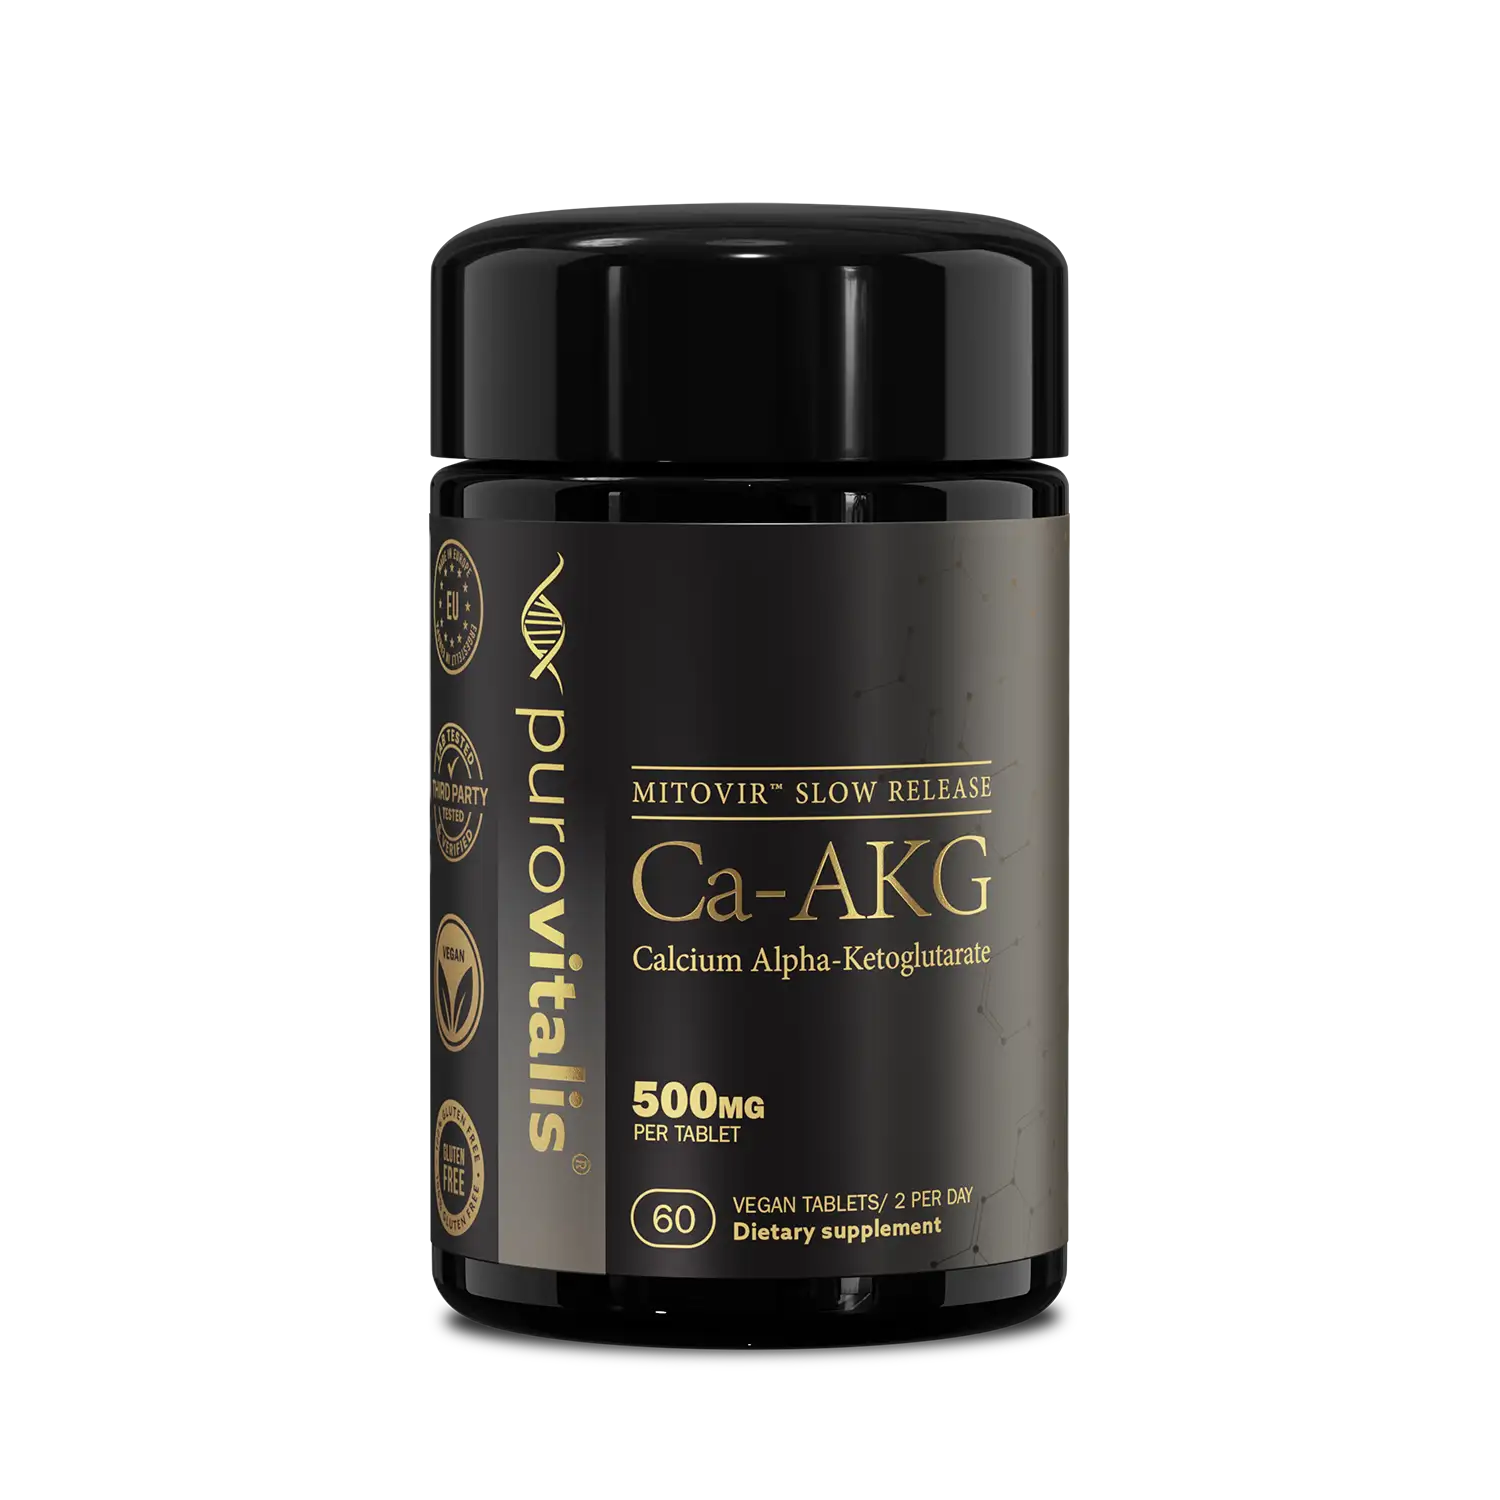 AKG supplement